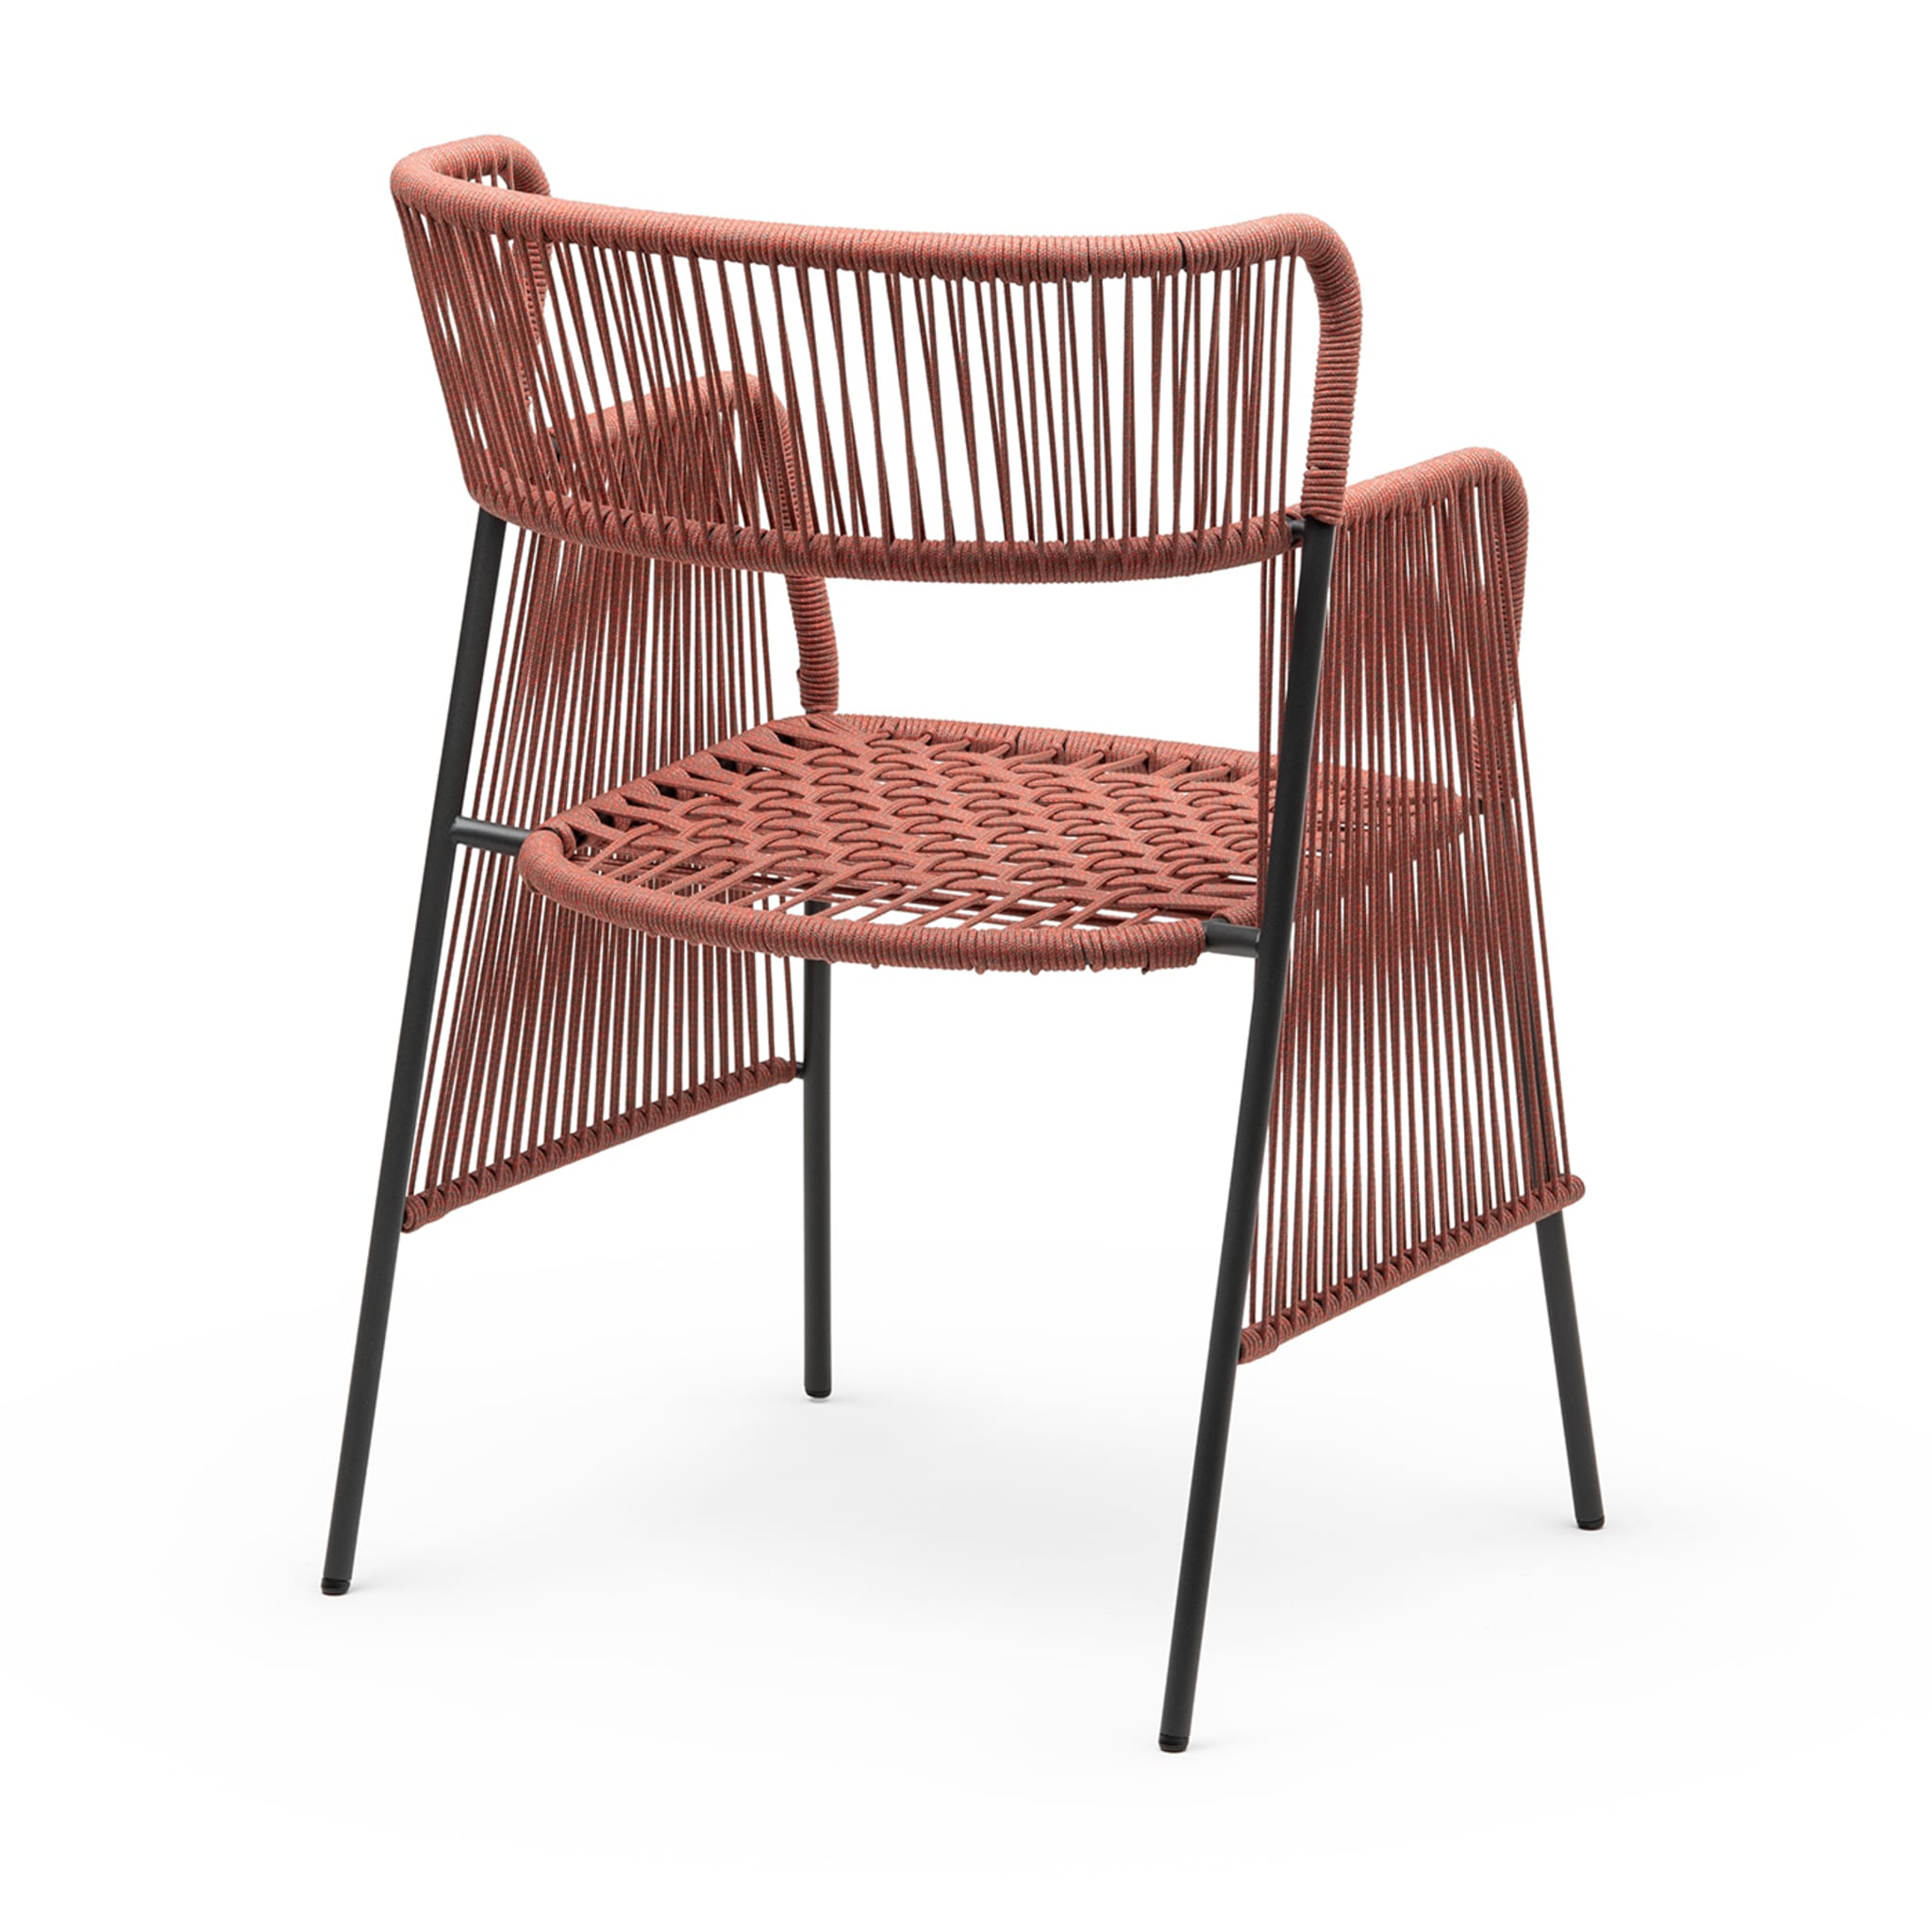 Altana SP Gray & Pink Chair by Antonio De Marco - Alternative view 2